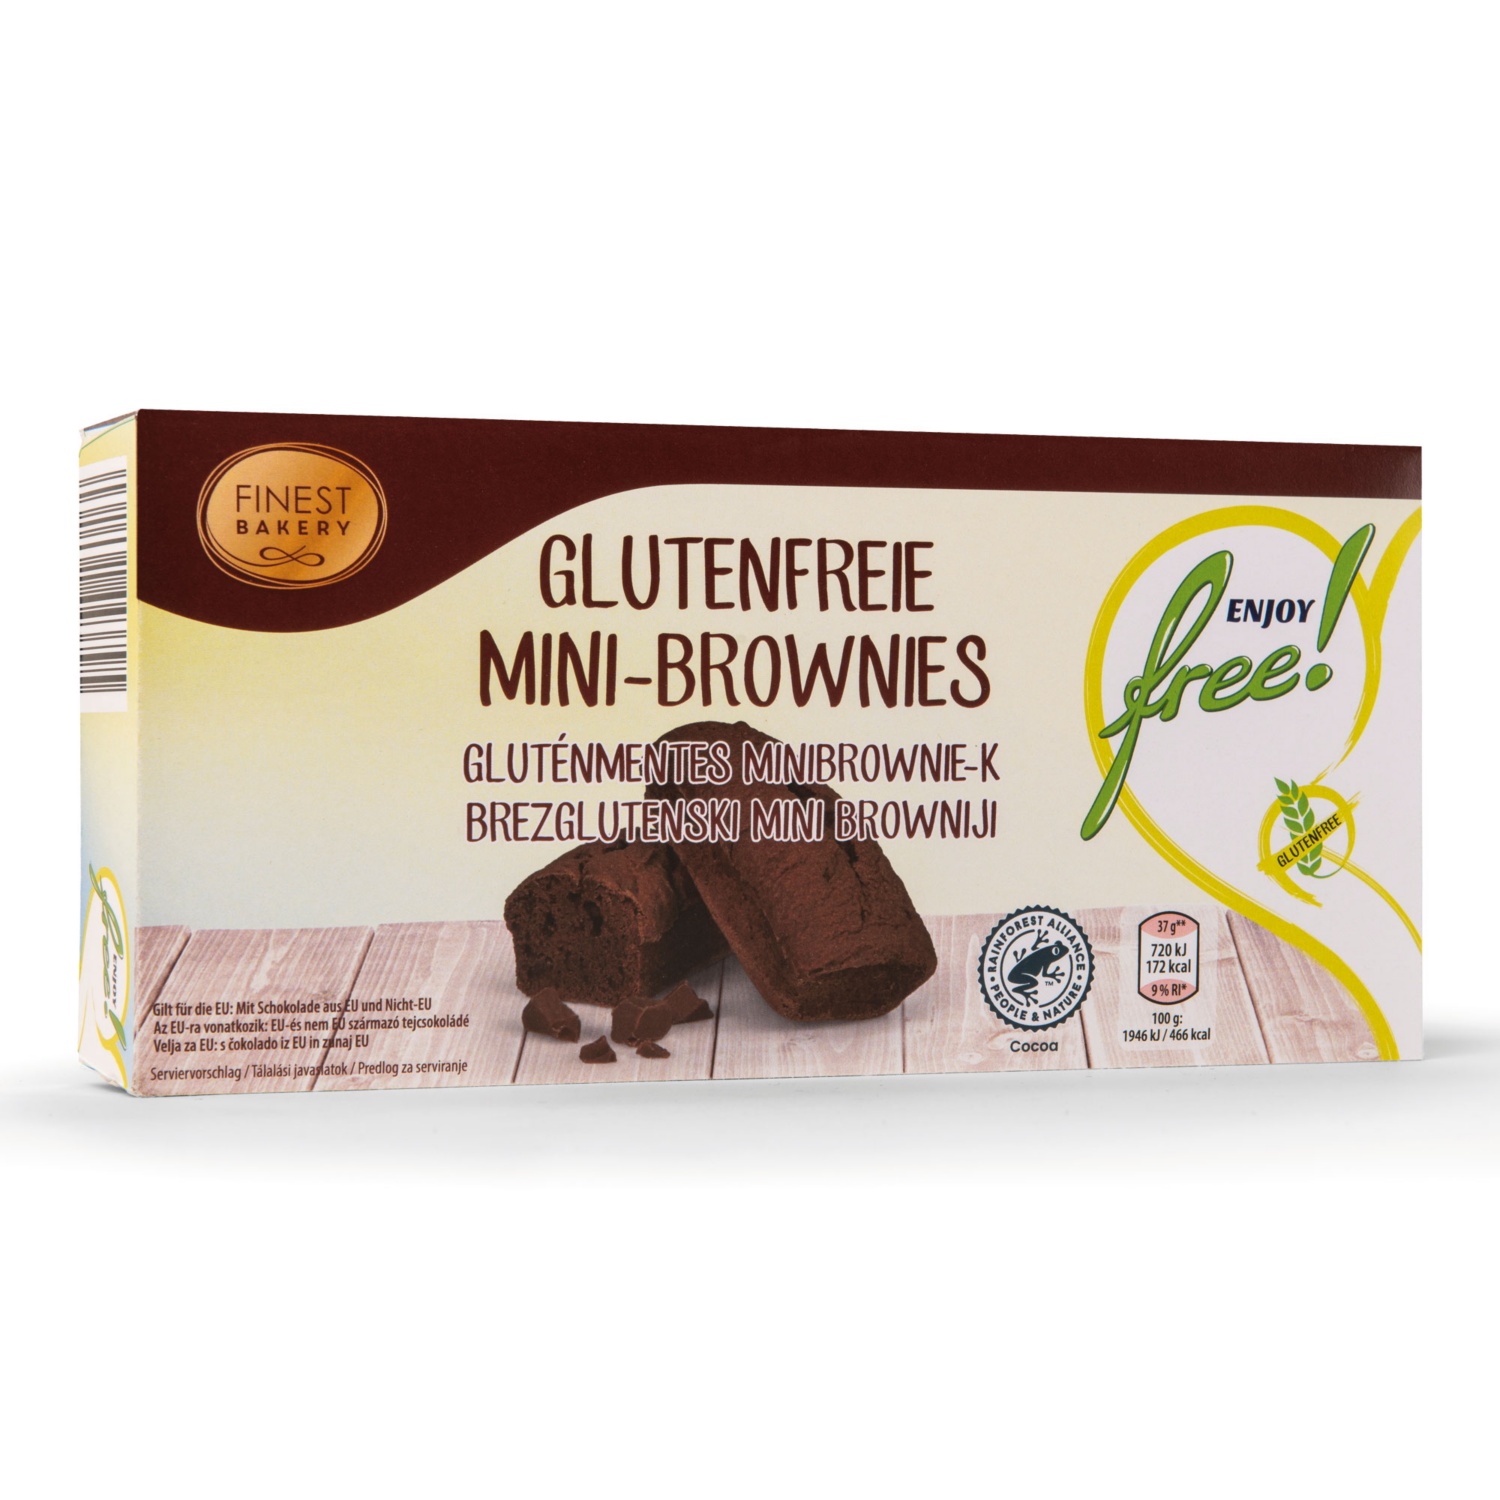 ENJOY FREE! Mini Kuchen glutenfrei, Brownies